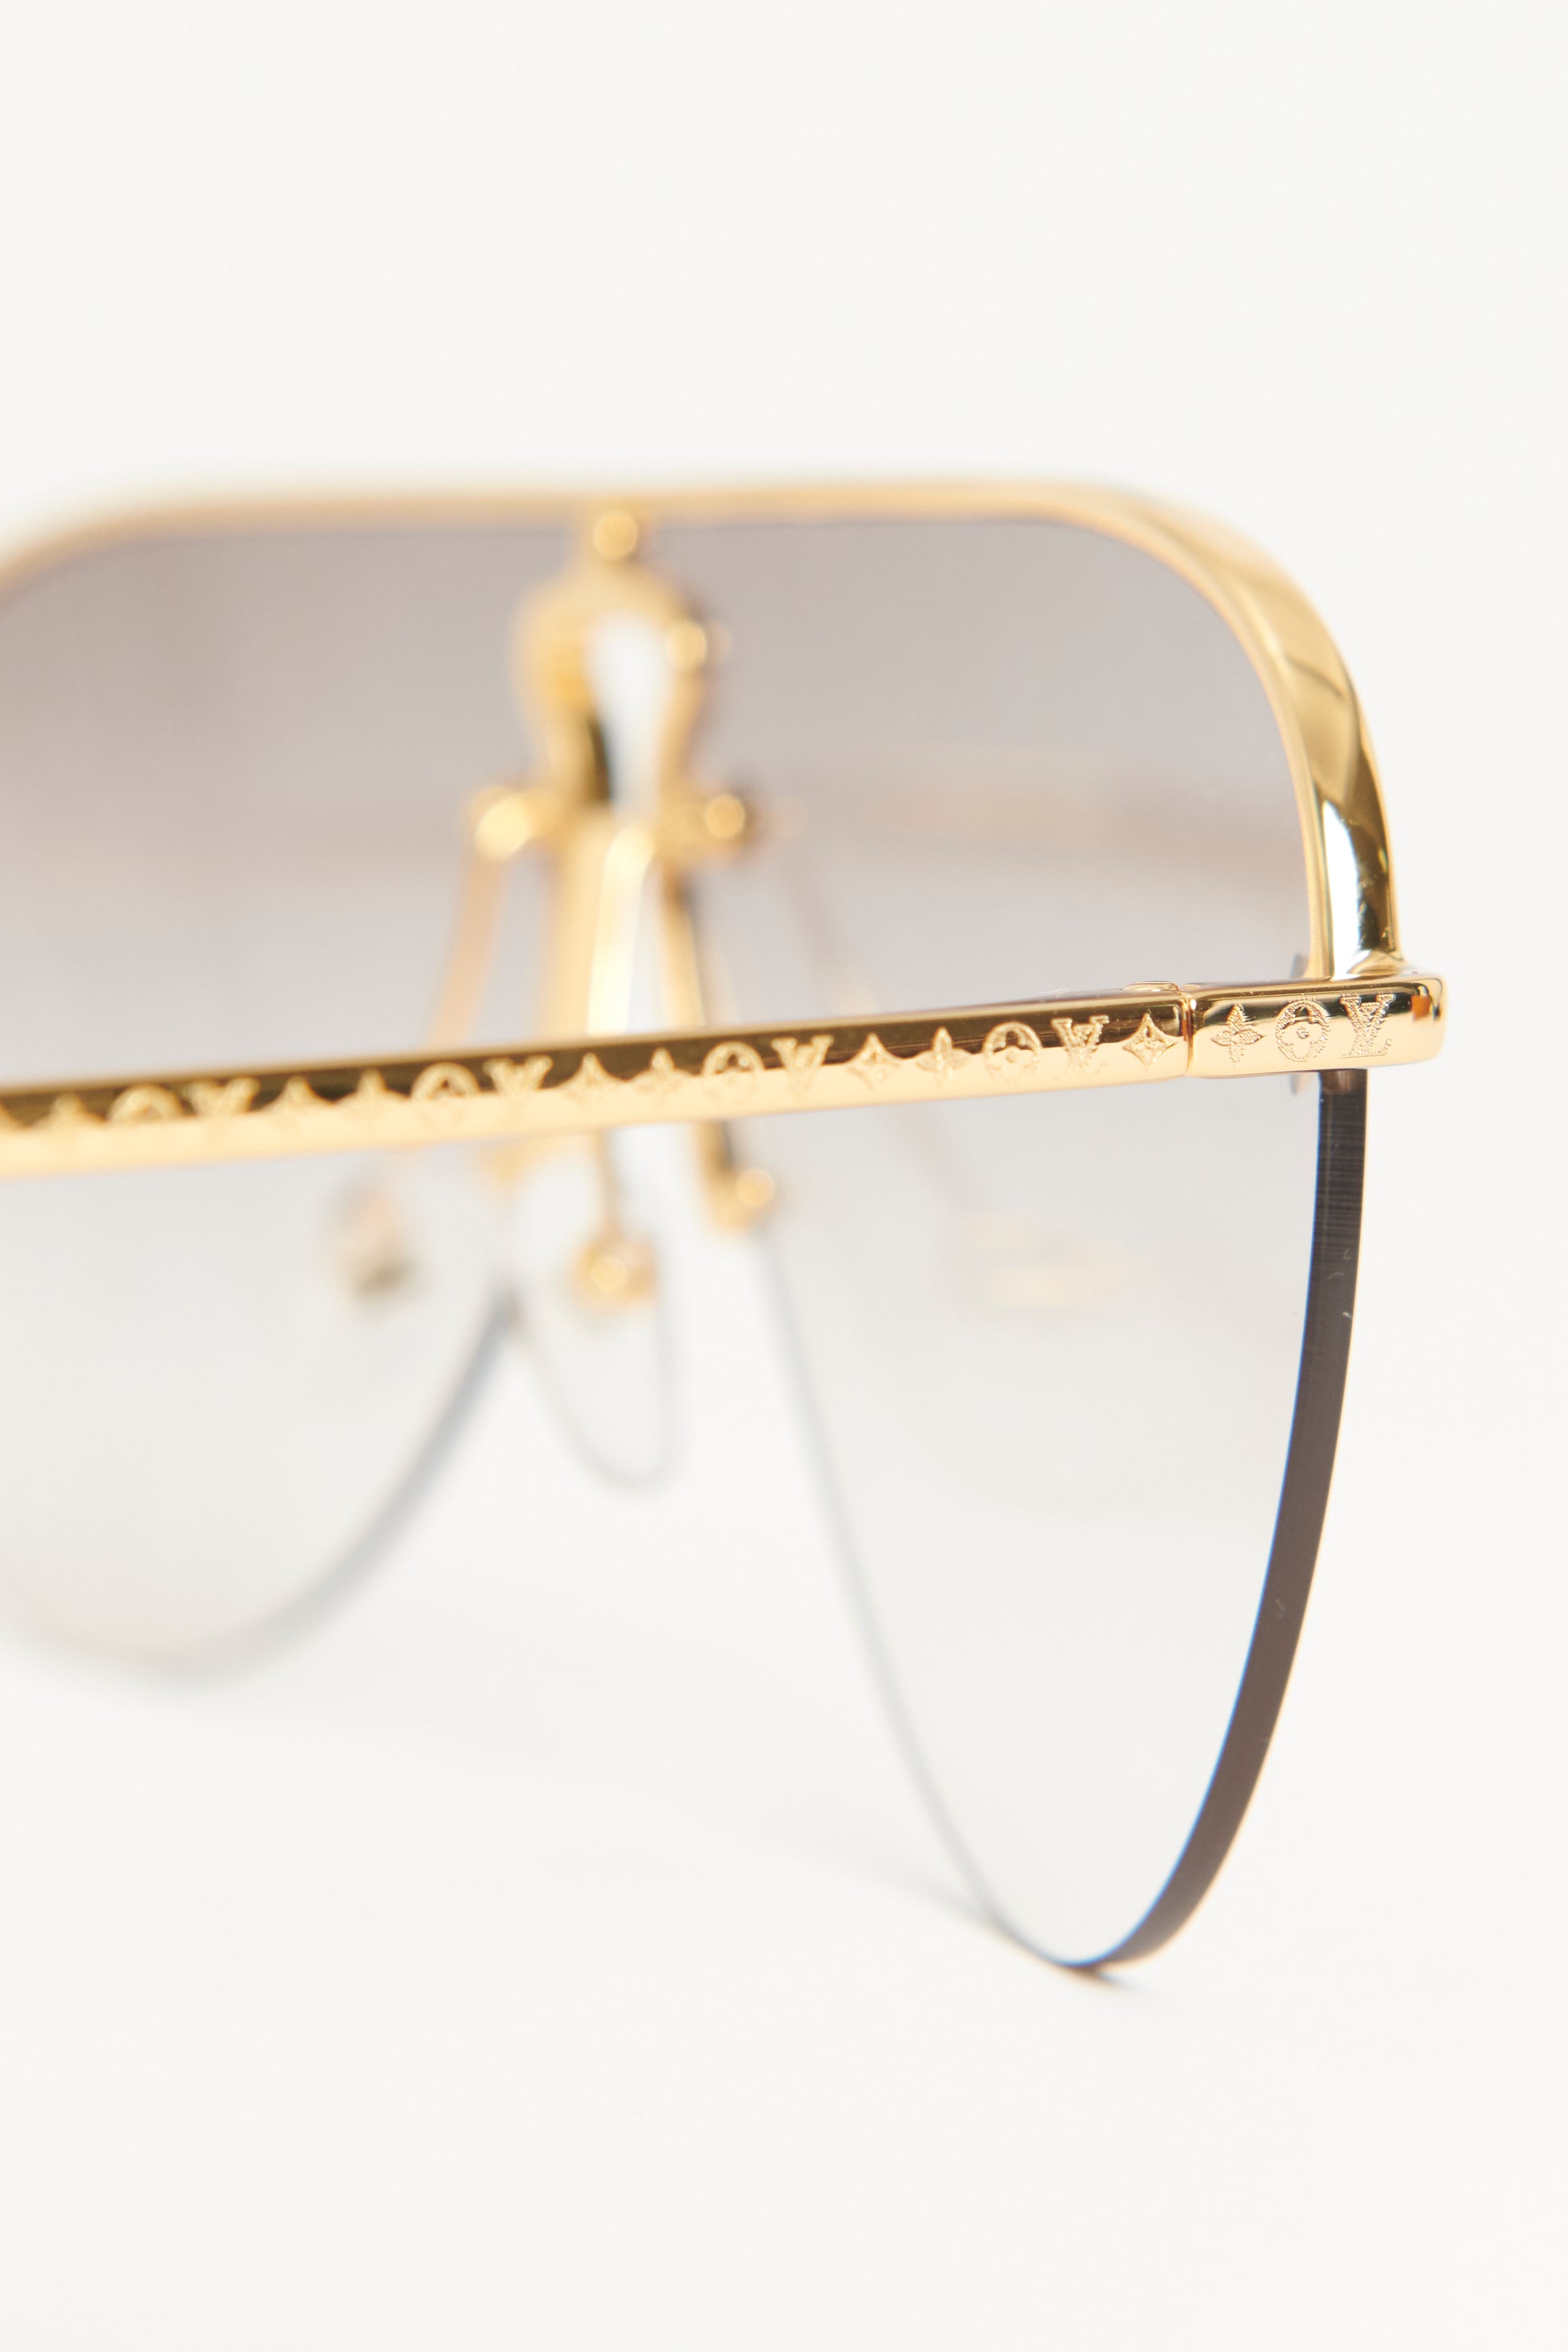 Louis Vuitton Pre-Owned Player Black/Grey Aviator Sunglasses Z1023W  W/ReceiptBox